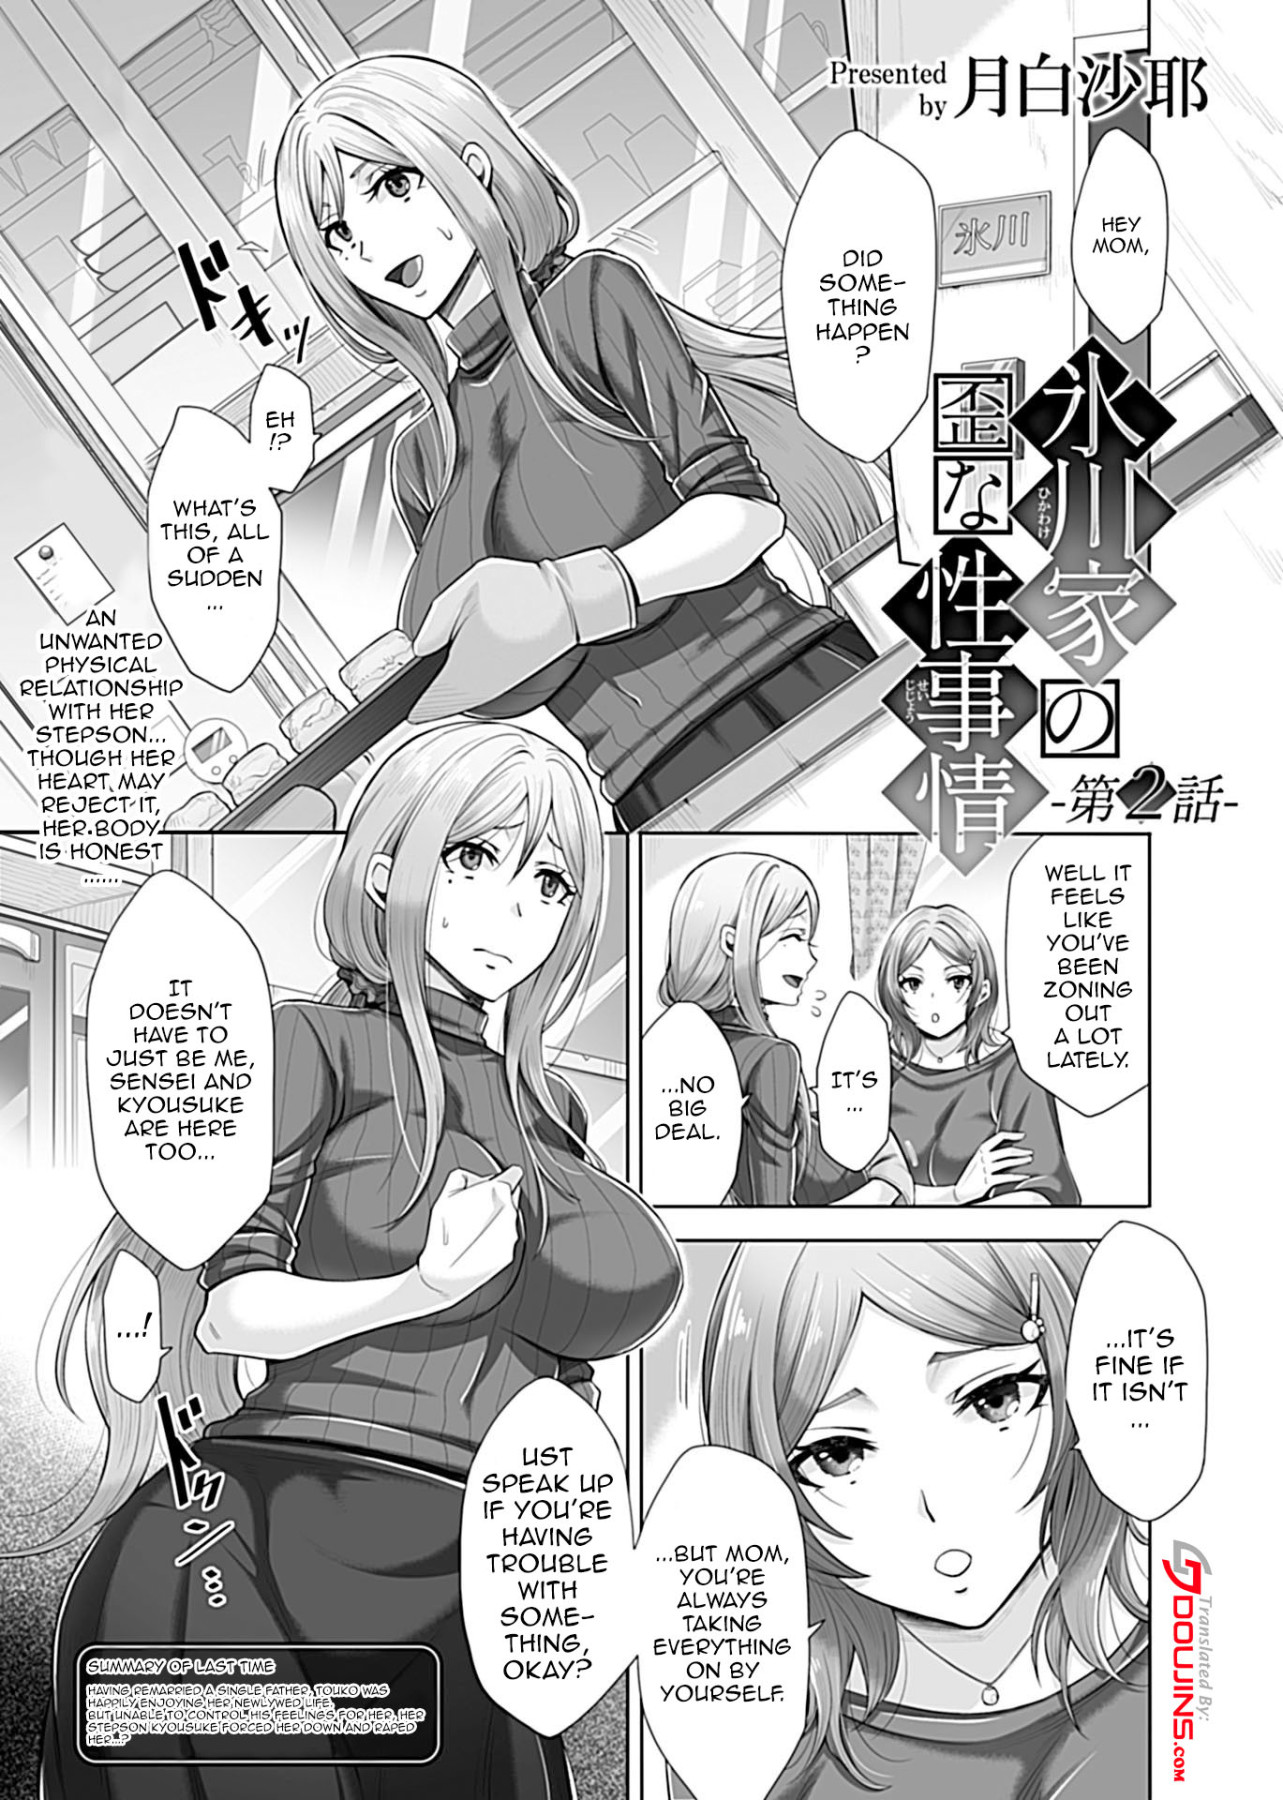 Hentai Manga Comic-The Distorted Sexual Circumstances Of The Hikawa Family-Chapter 2-2